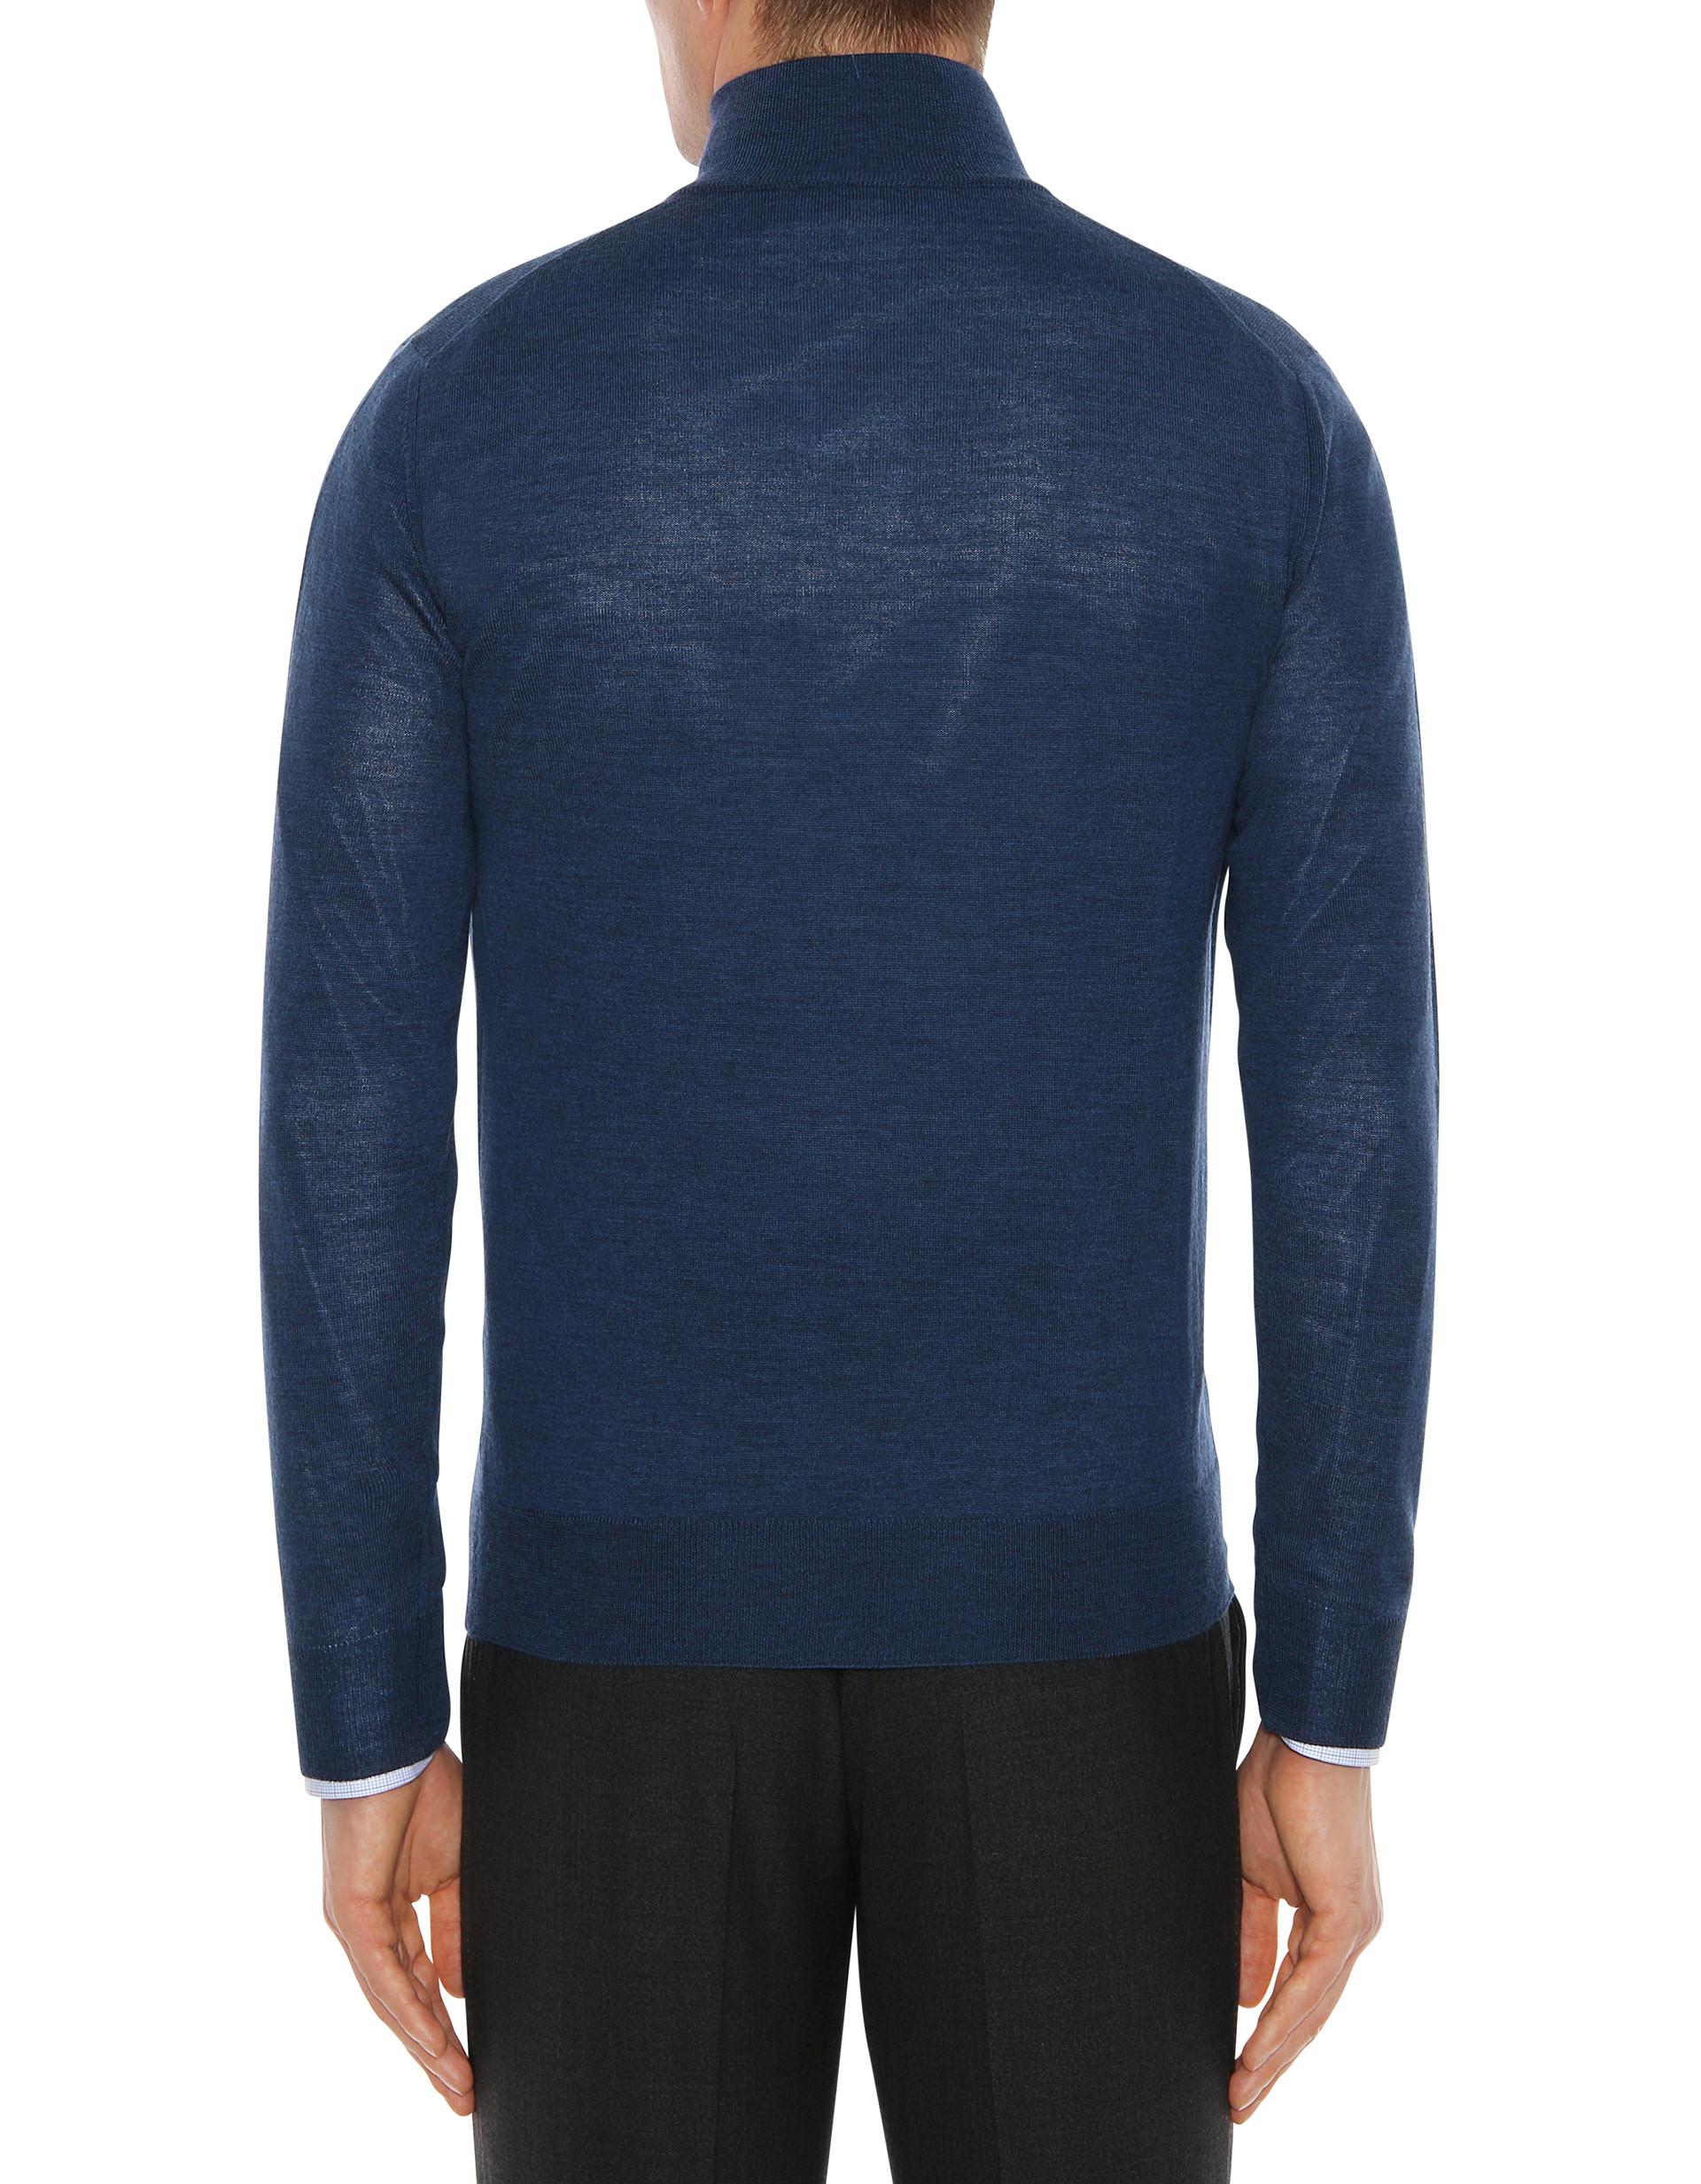 Lyst - Canali Blue Virgin Wool Half-zip Sweater in Brown for Men